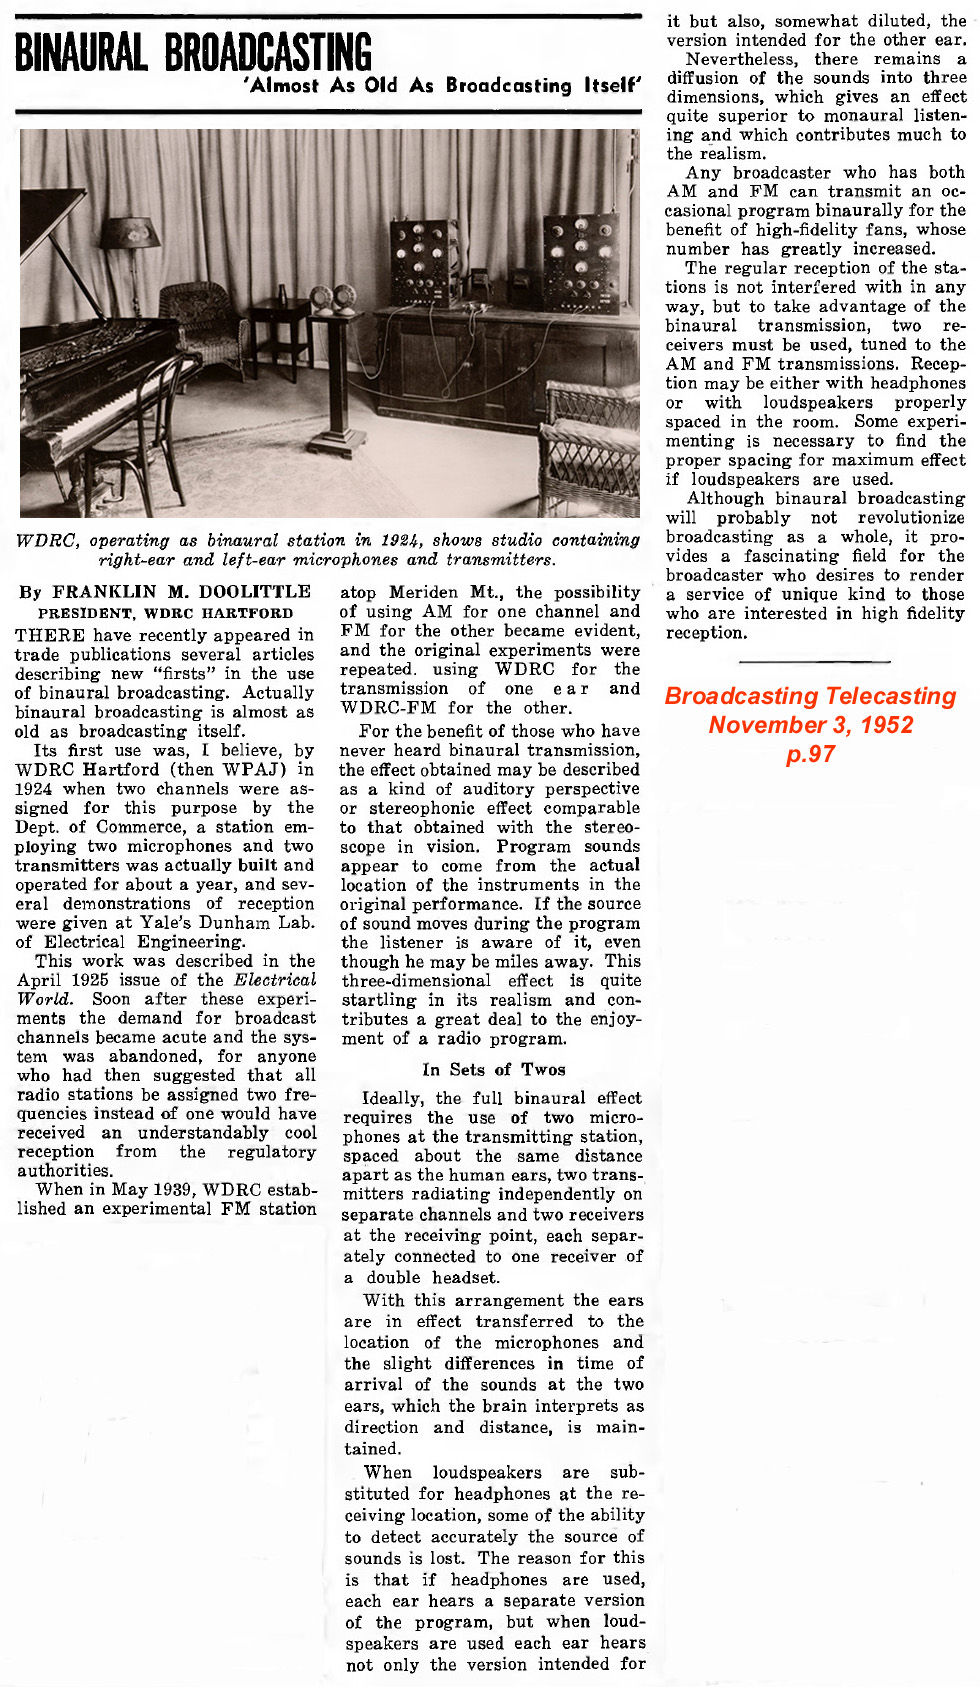 Broadcasting-Telecasting magazine - November 3, 1952, p.97